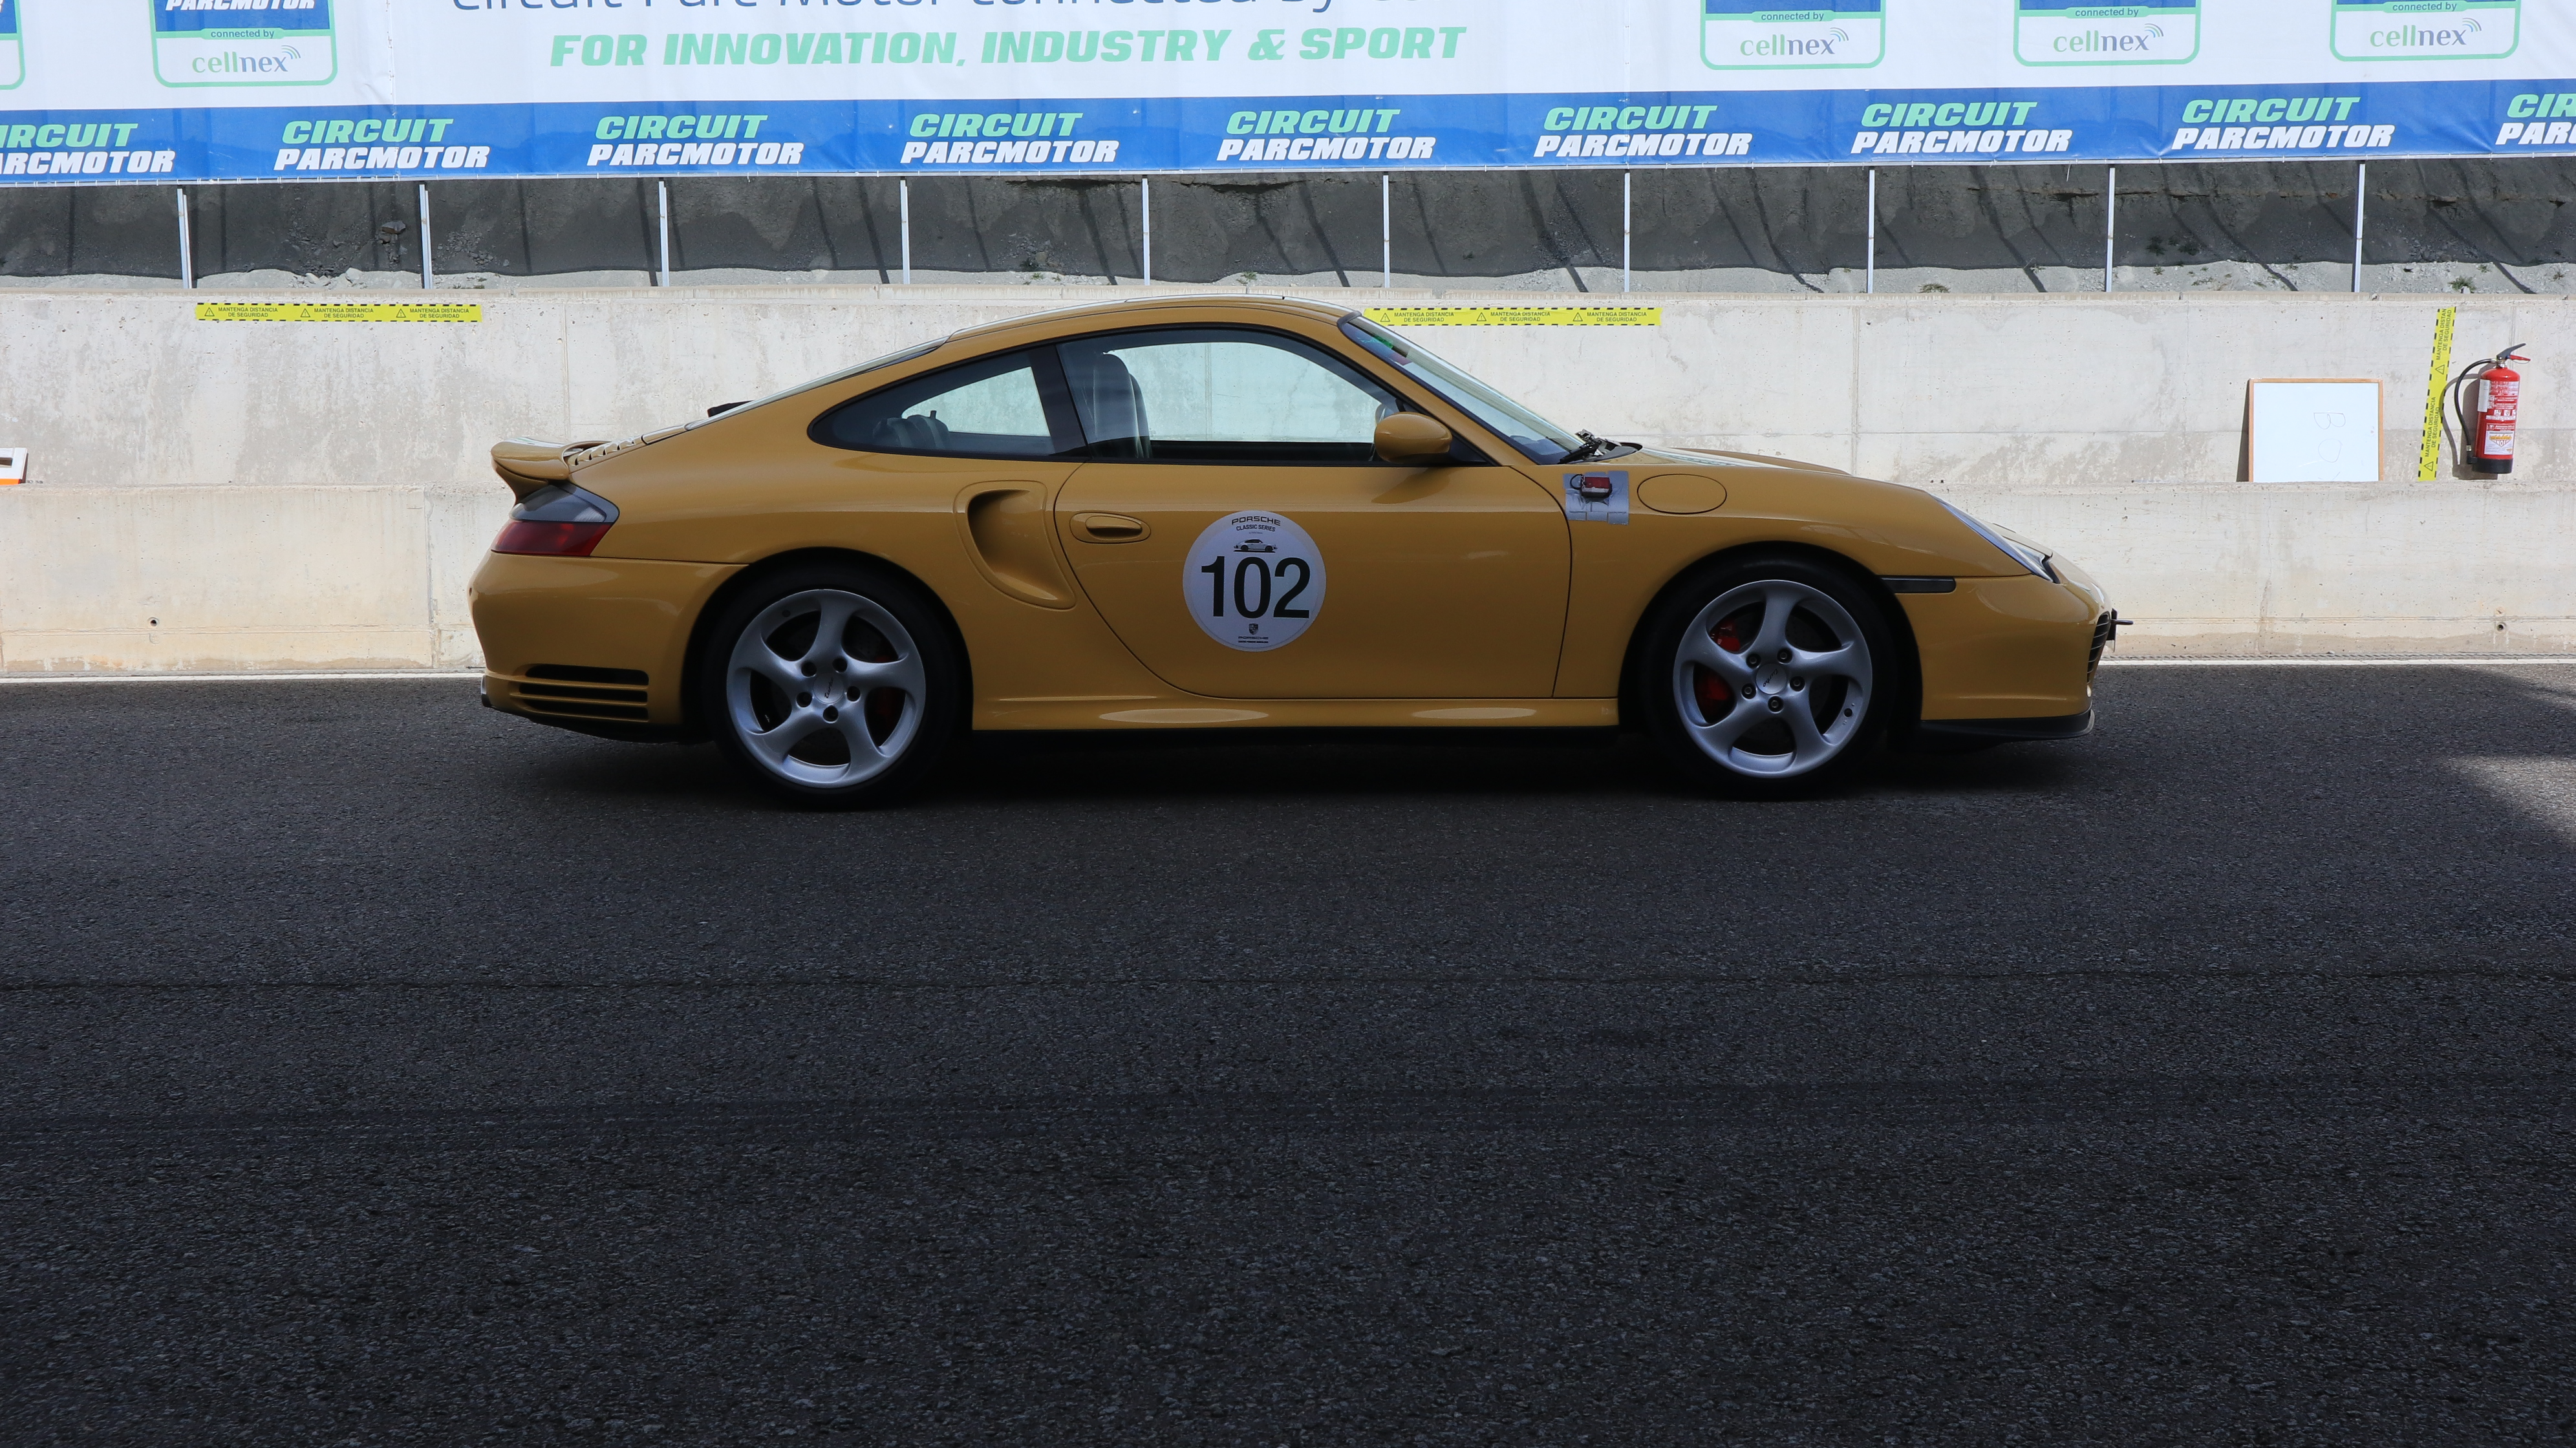 IMG_4747 SemanalClásico - Revista online de coches clásicos, de colección y sport - Porsche